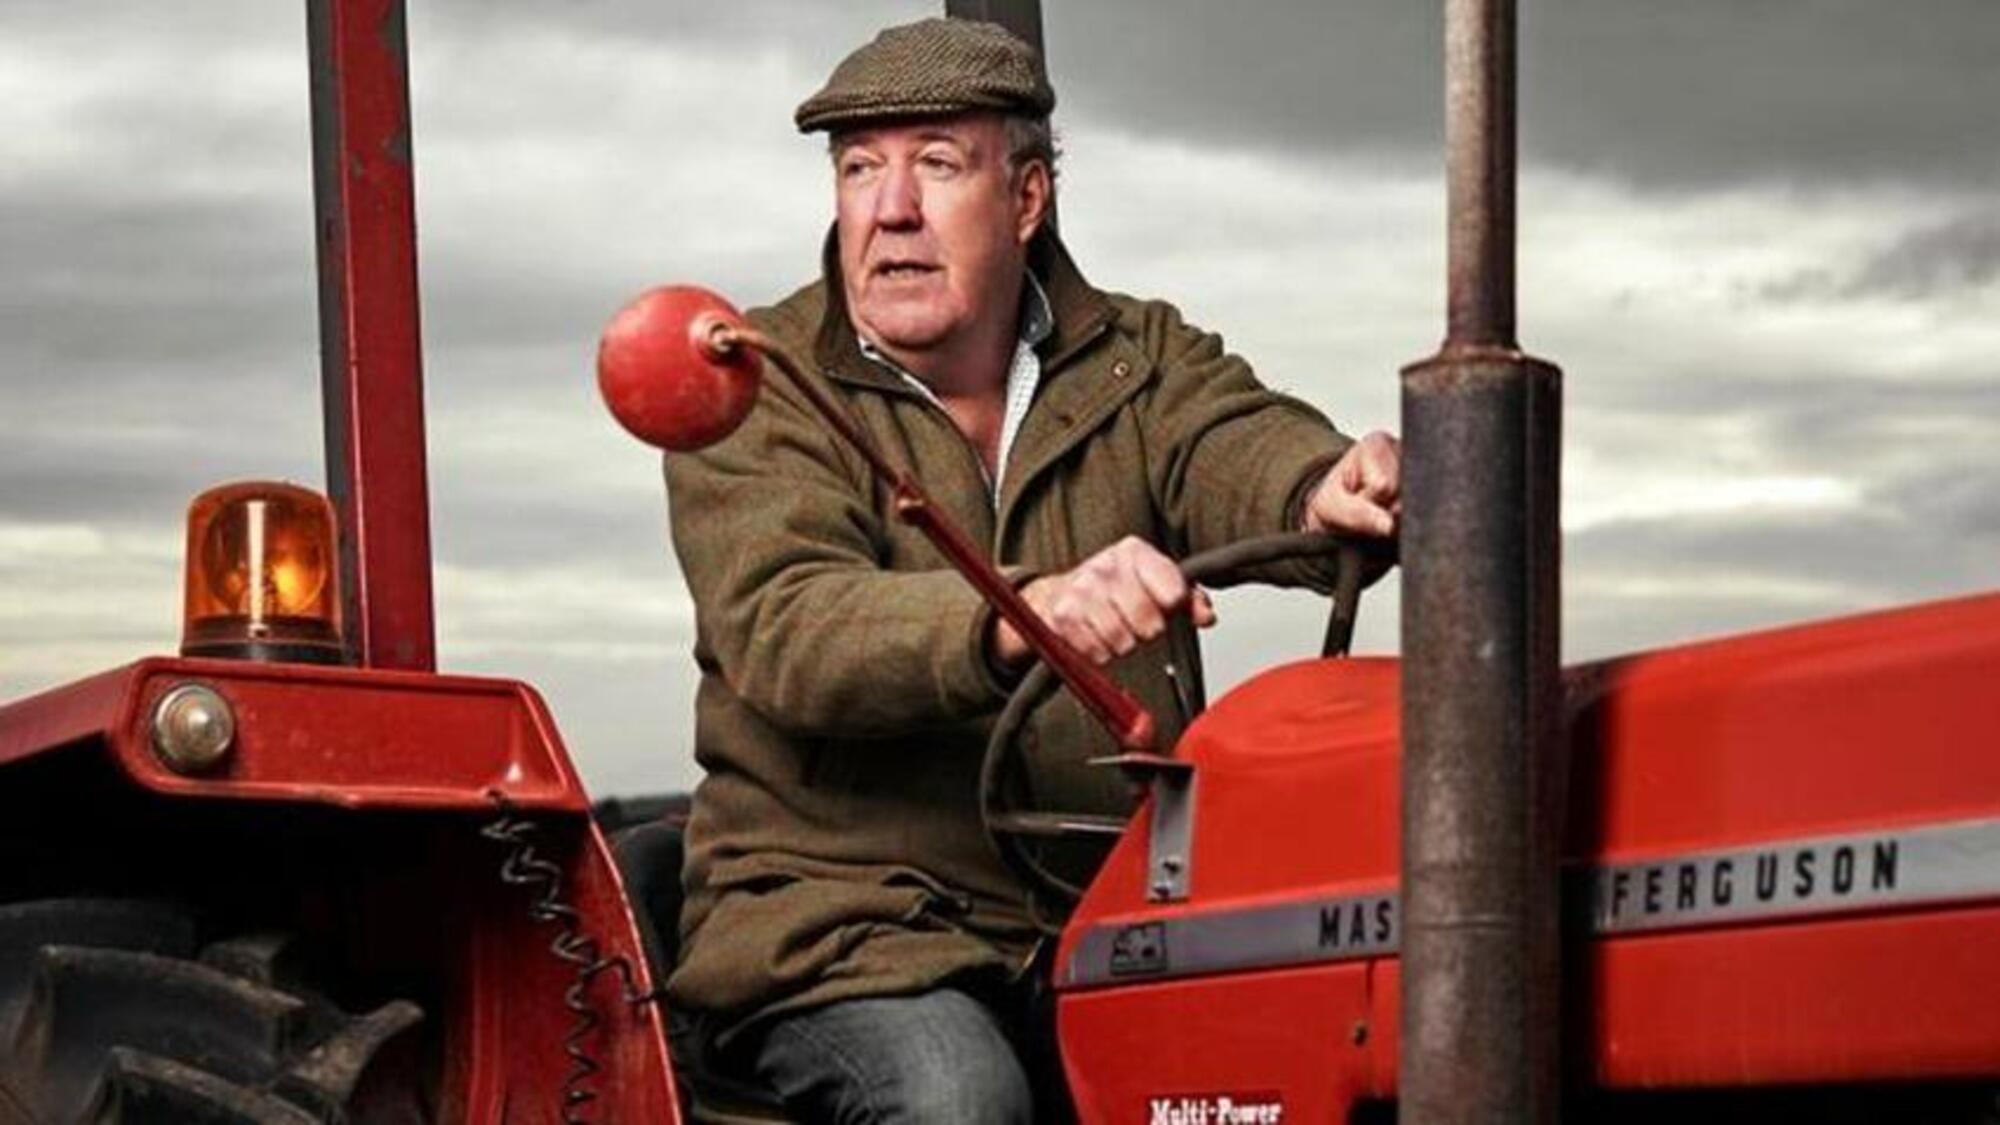 Jeremy Clarkson farmer